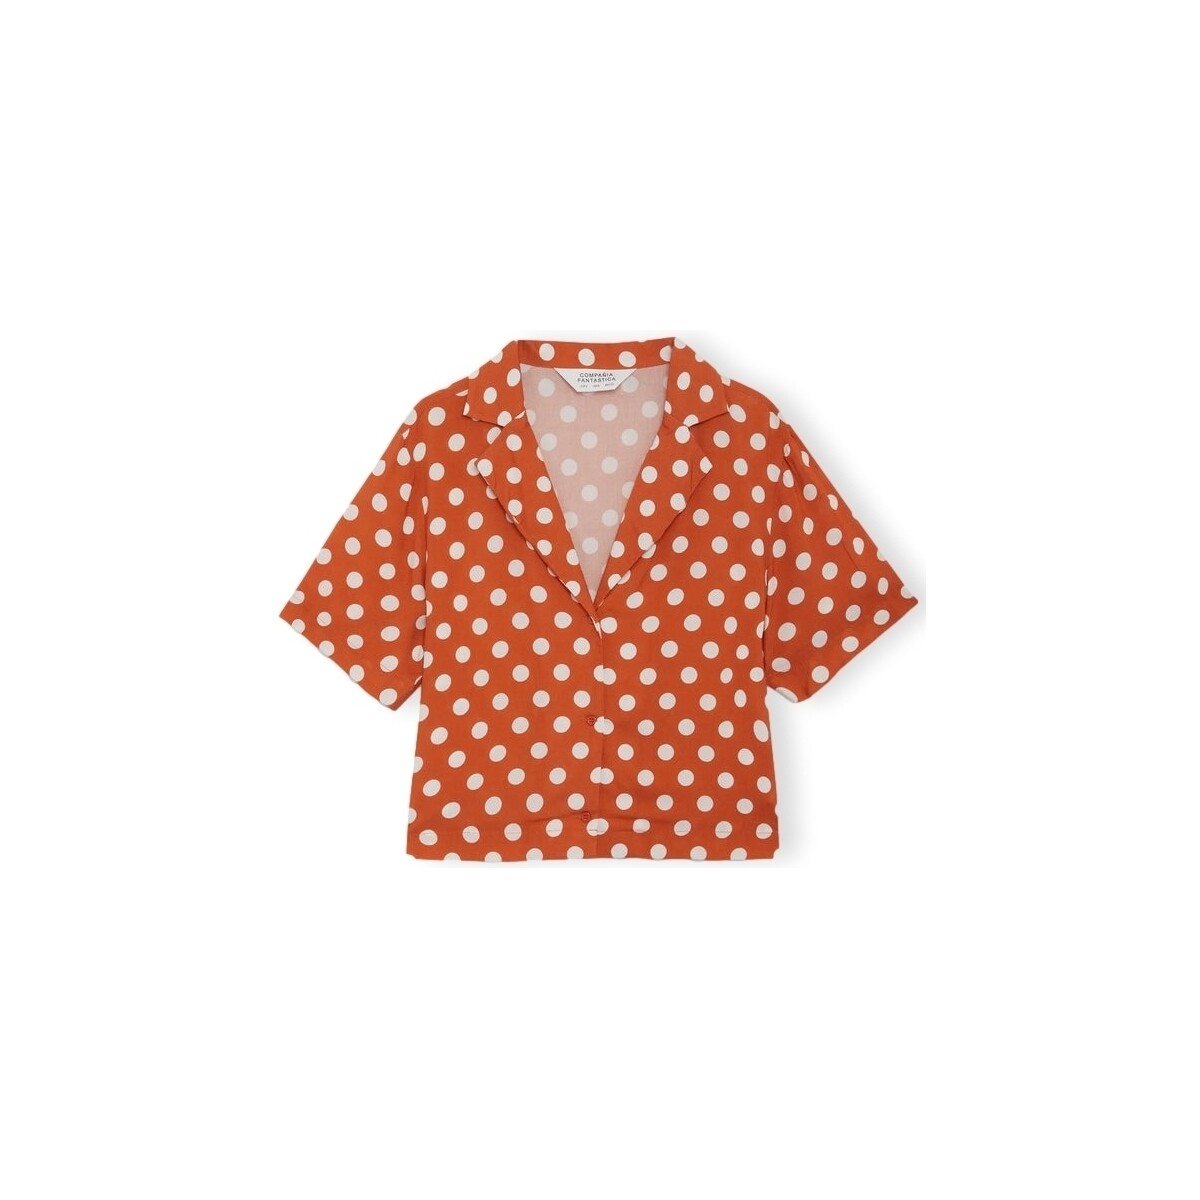 Vêtements Femme Tops / Blouses Compania Fantastica COMPAÑIA FANTÁSTICA Shirt 12122 - Polka Dots Orange